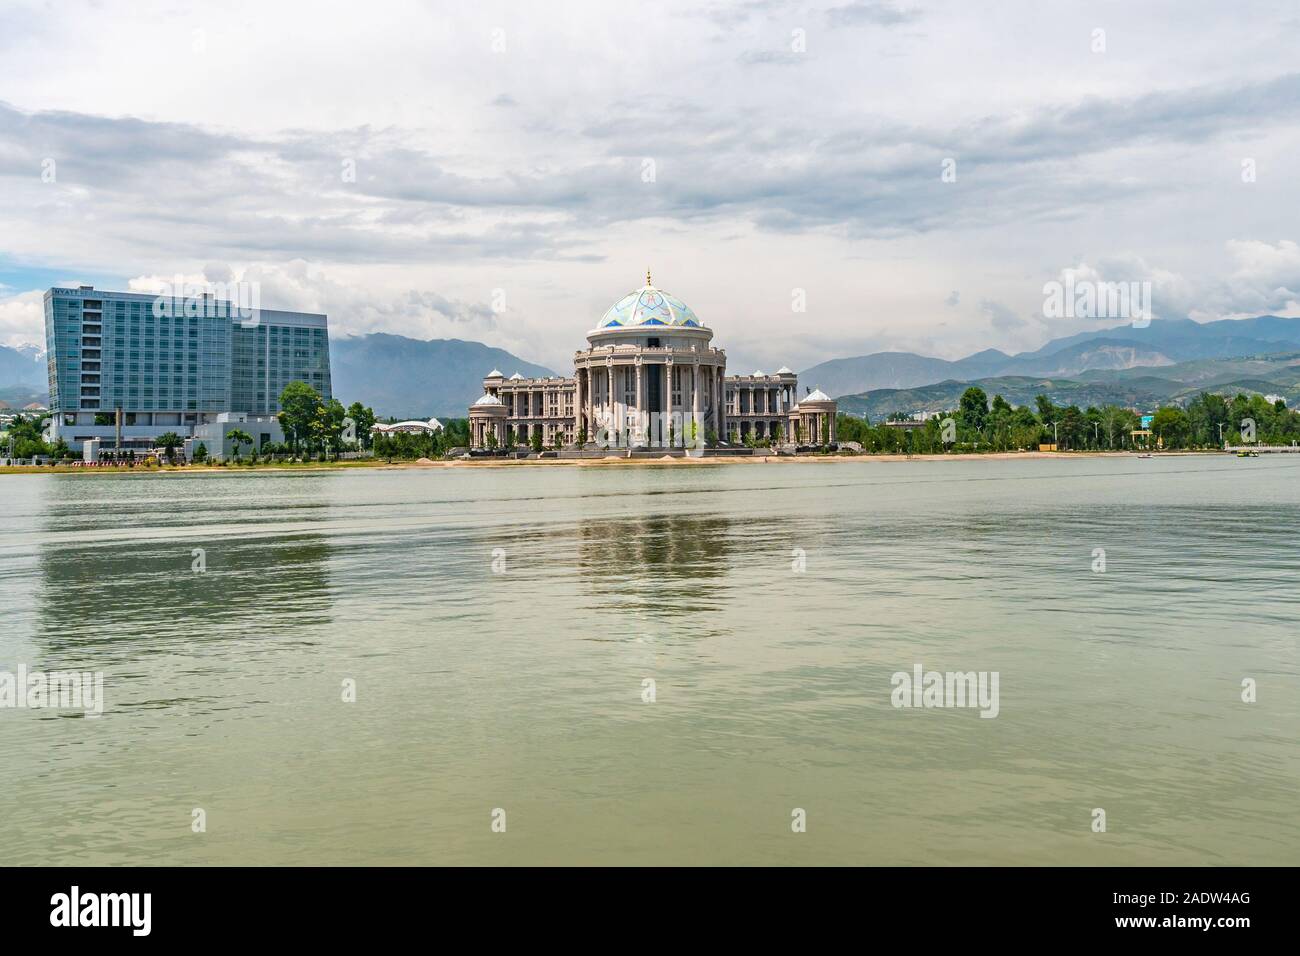 Dushanbe Komsomolskoe Lake Picturesque View of Hyatt Regency Hotel and Navruz Palace on a Cloudy Rainy Day Stock Photo